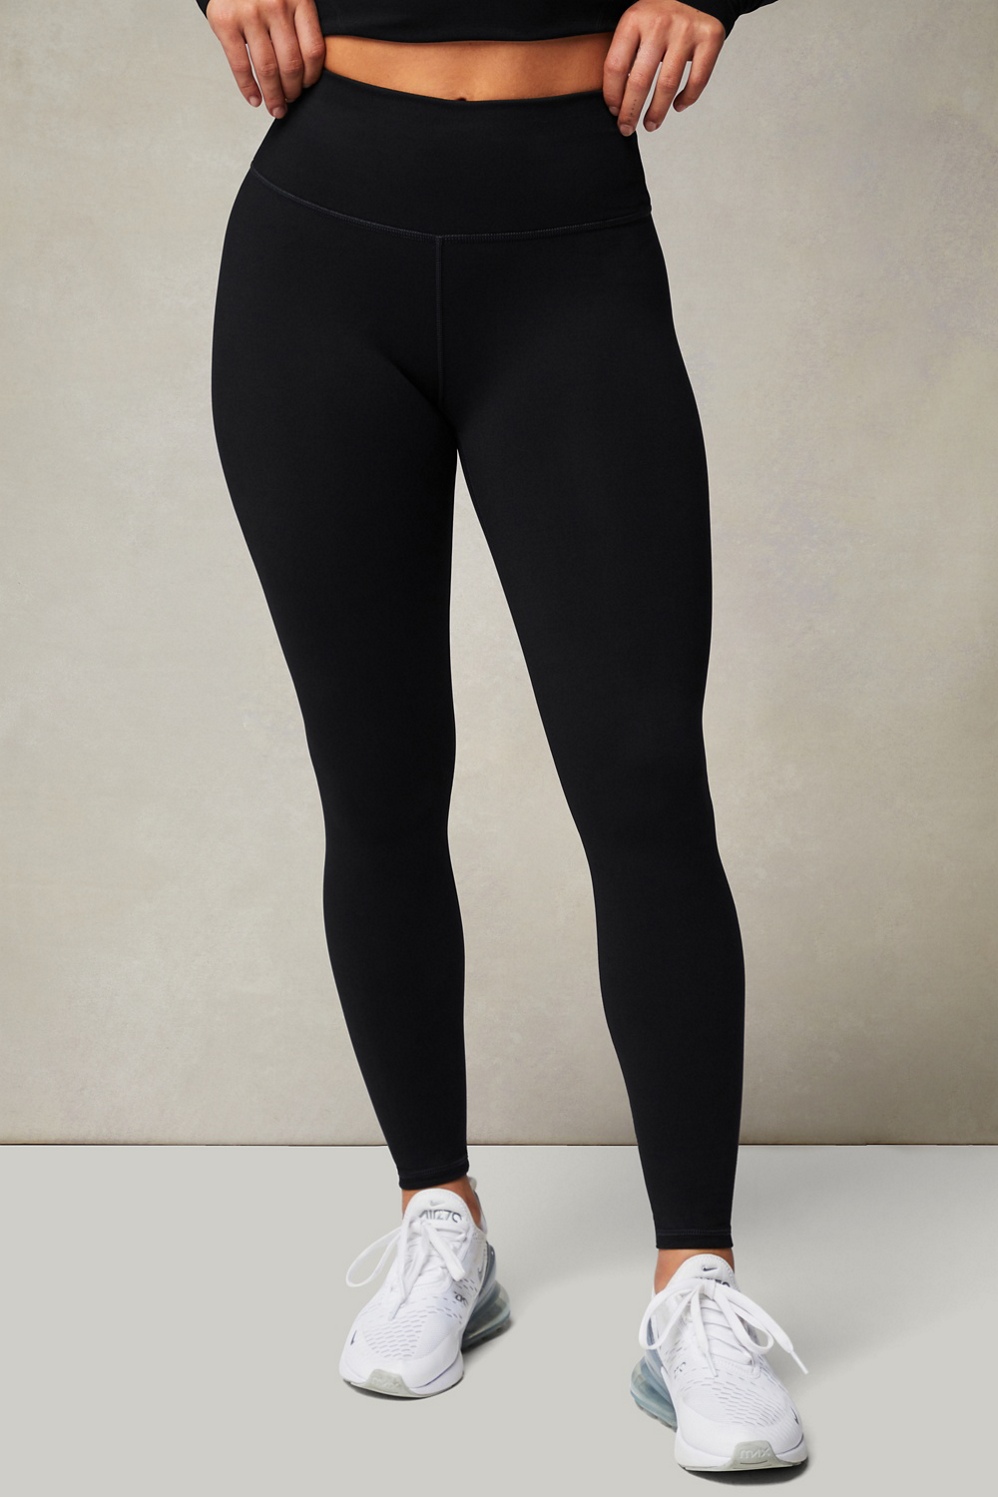 Cosmolle High Waist Legging Black - $28 (50% Off Retail) - From Kassandra